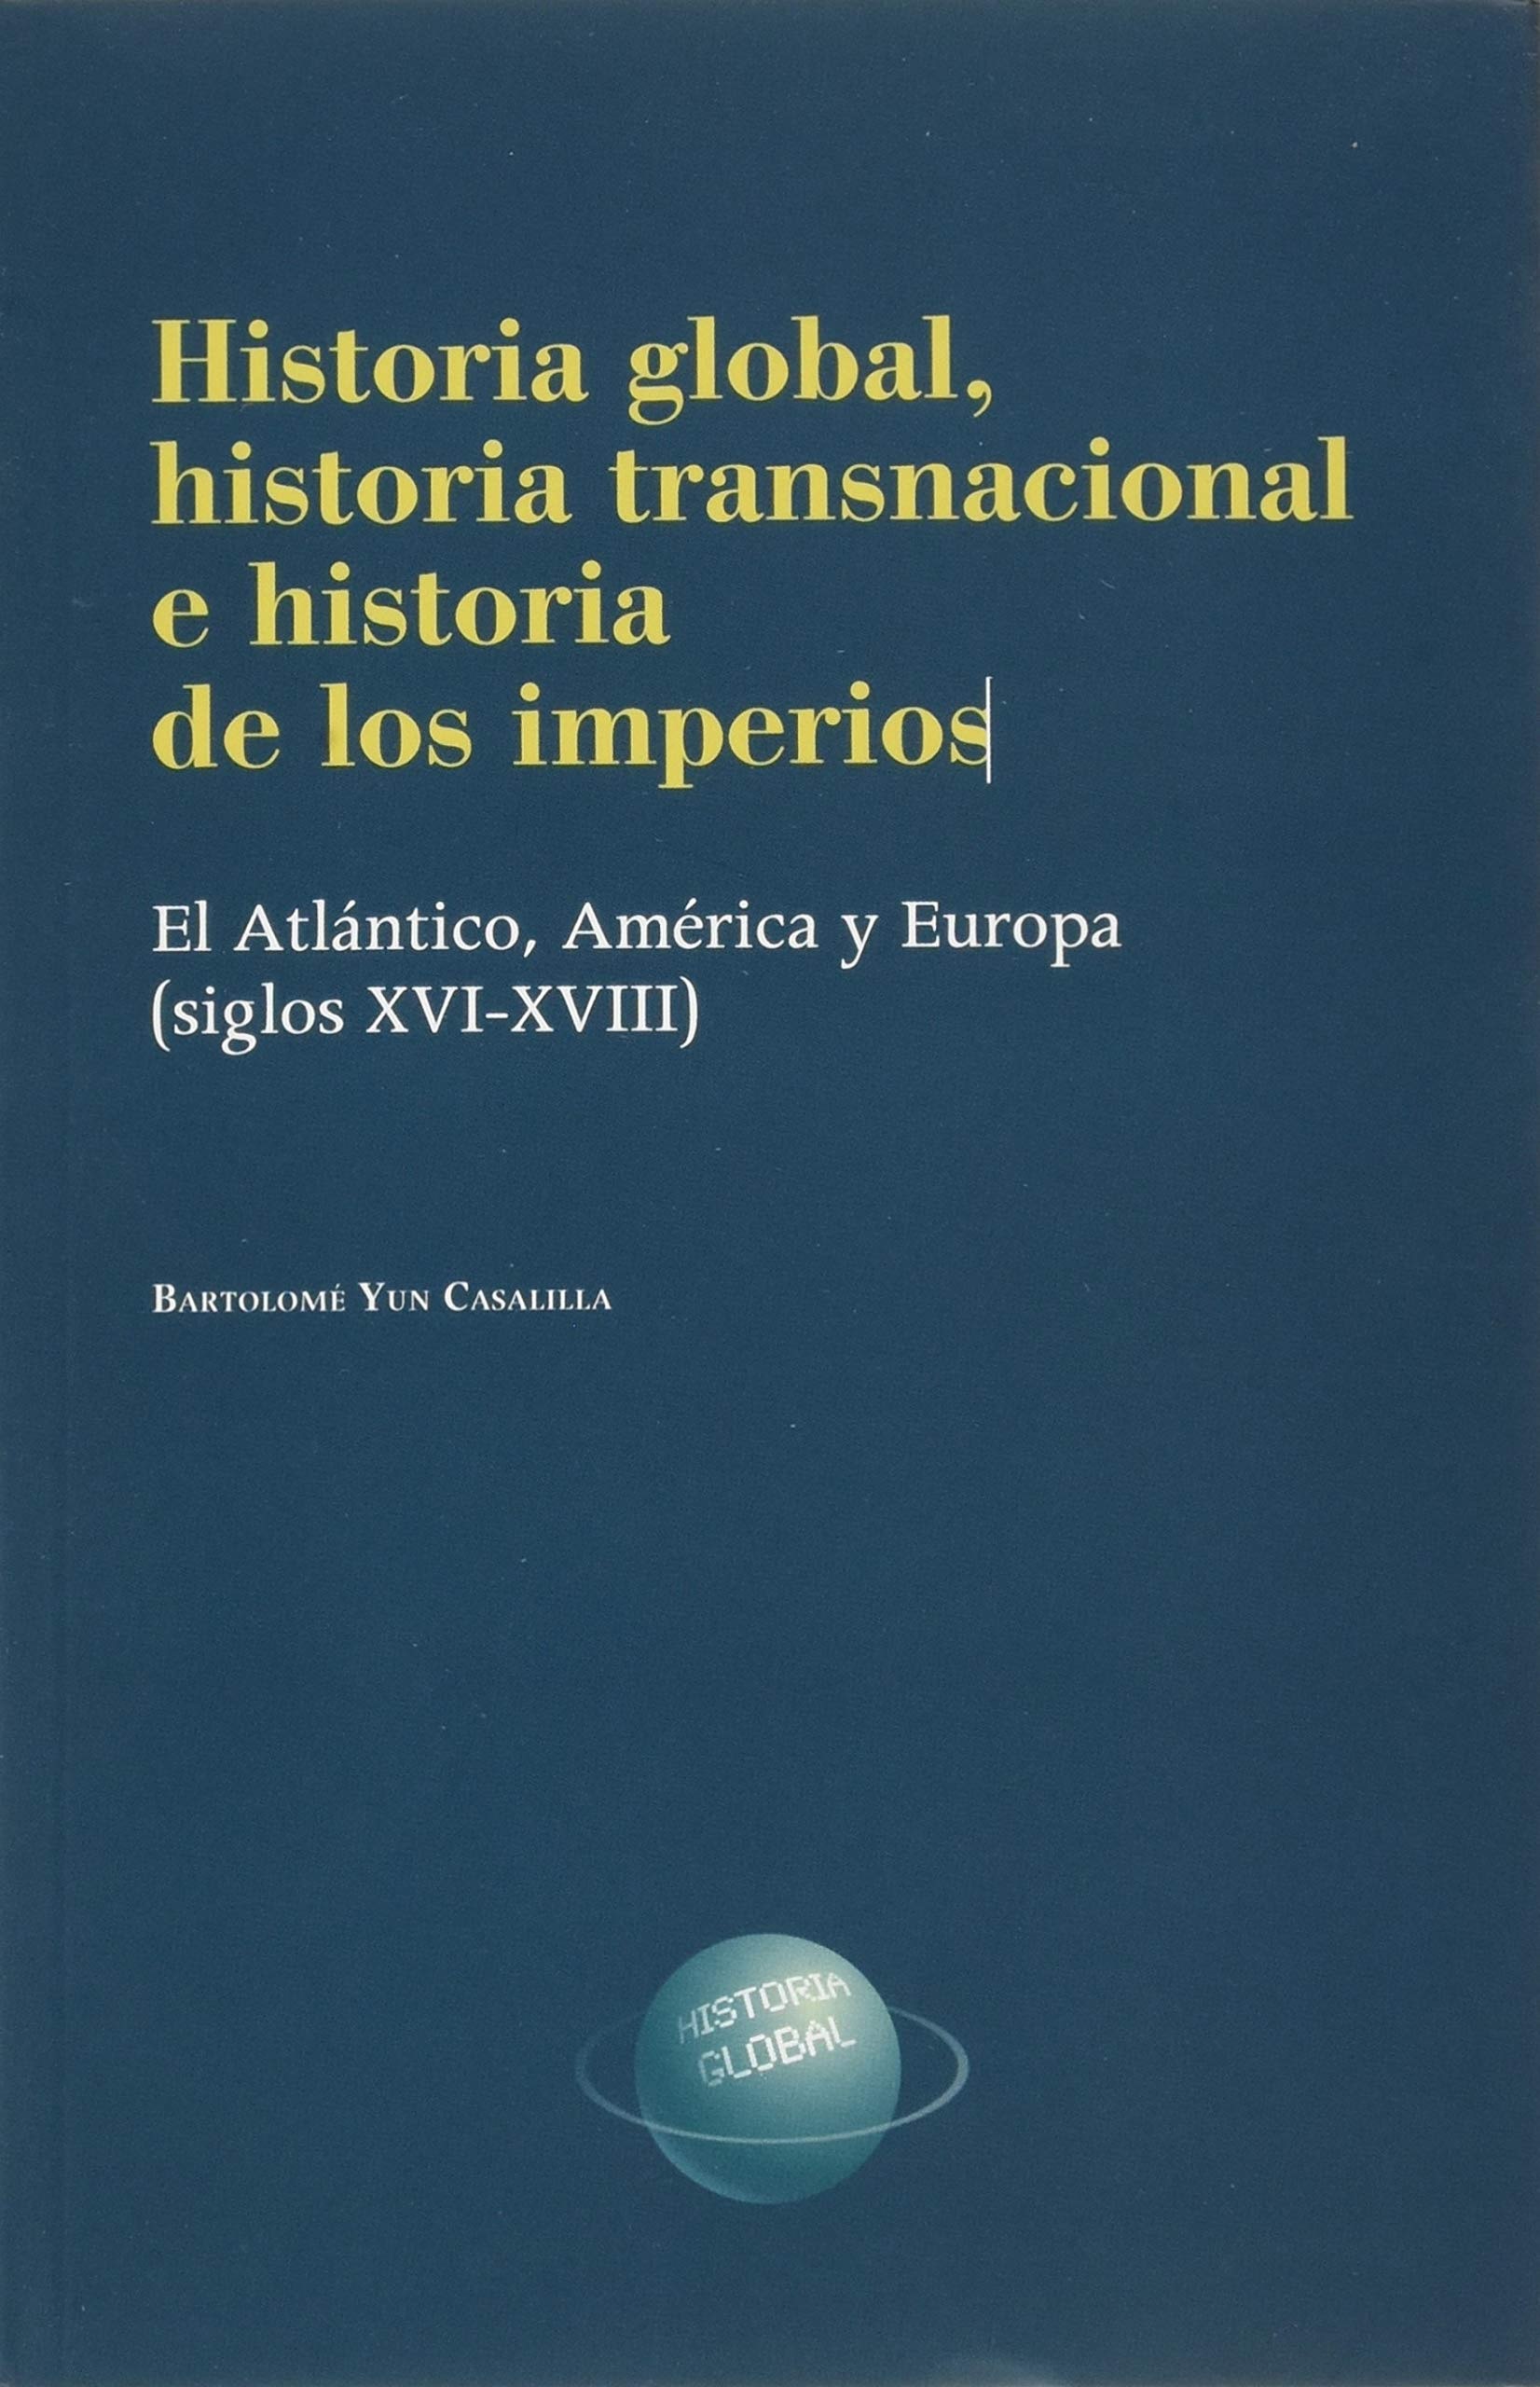 Imagen de portada del libro Historia global, historia transnacional e historia de los imperios.